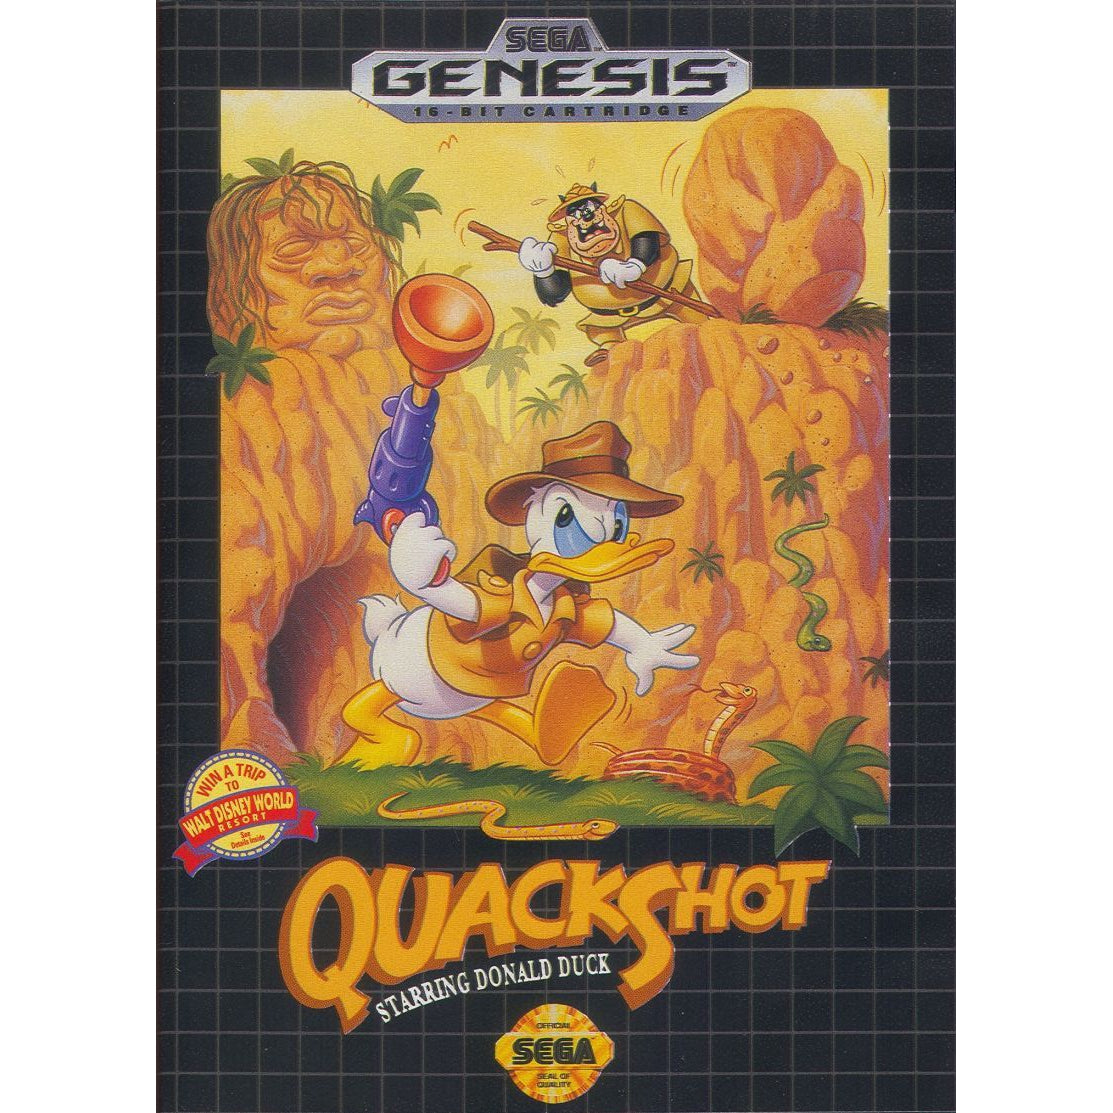 QuackShot Starring Donald Duck - Sega Genesis Game - YourGamingShop.com - Buy, Sell, Trade Video Games Online. 120 Day Warranty. Satisfaction Guaranteed.